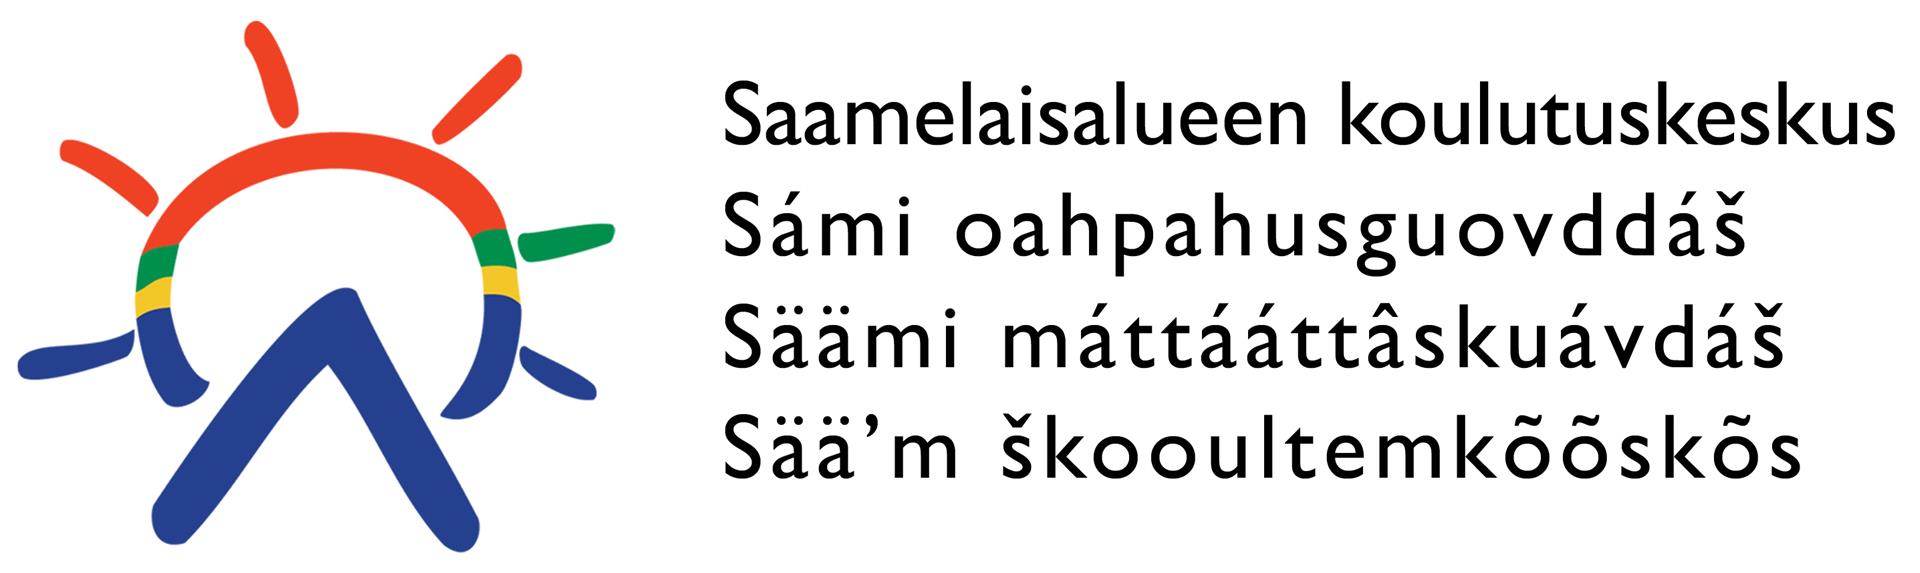 Saamelaisalueen koulutuskeskus, Sámi oahpahusguovddáš, Säämi máttááttâskuávdaš, Sääʹm škooultemkõõskõs